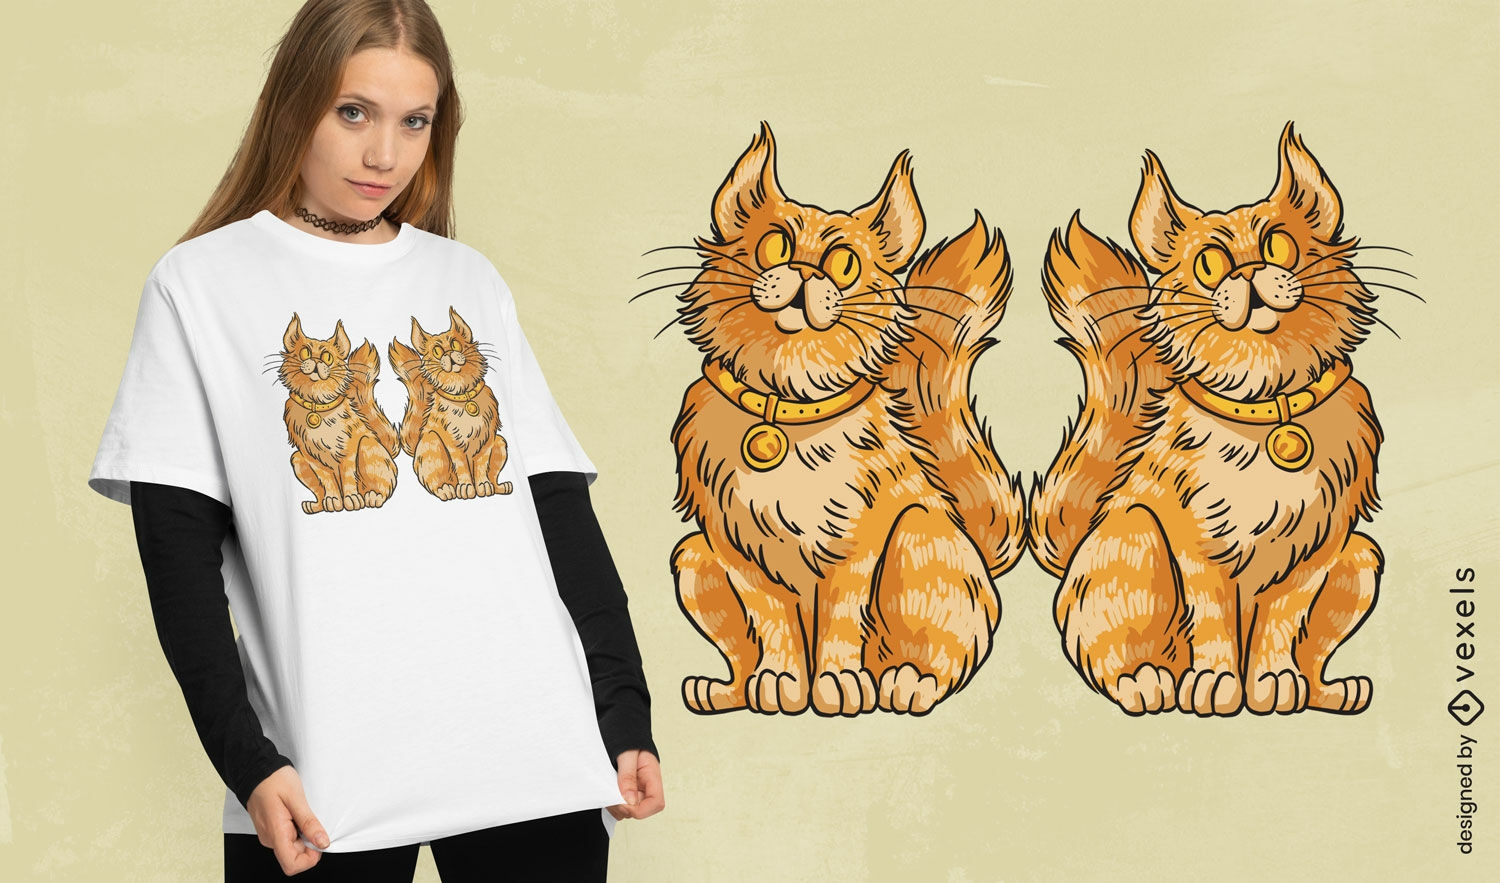 Maine coon twin cat animals t-shirt design